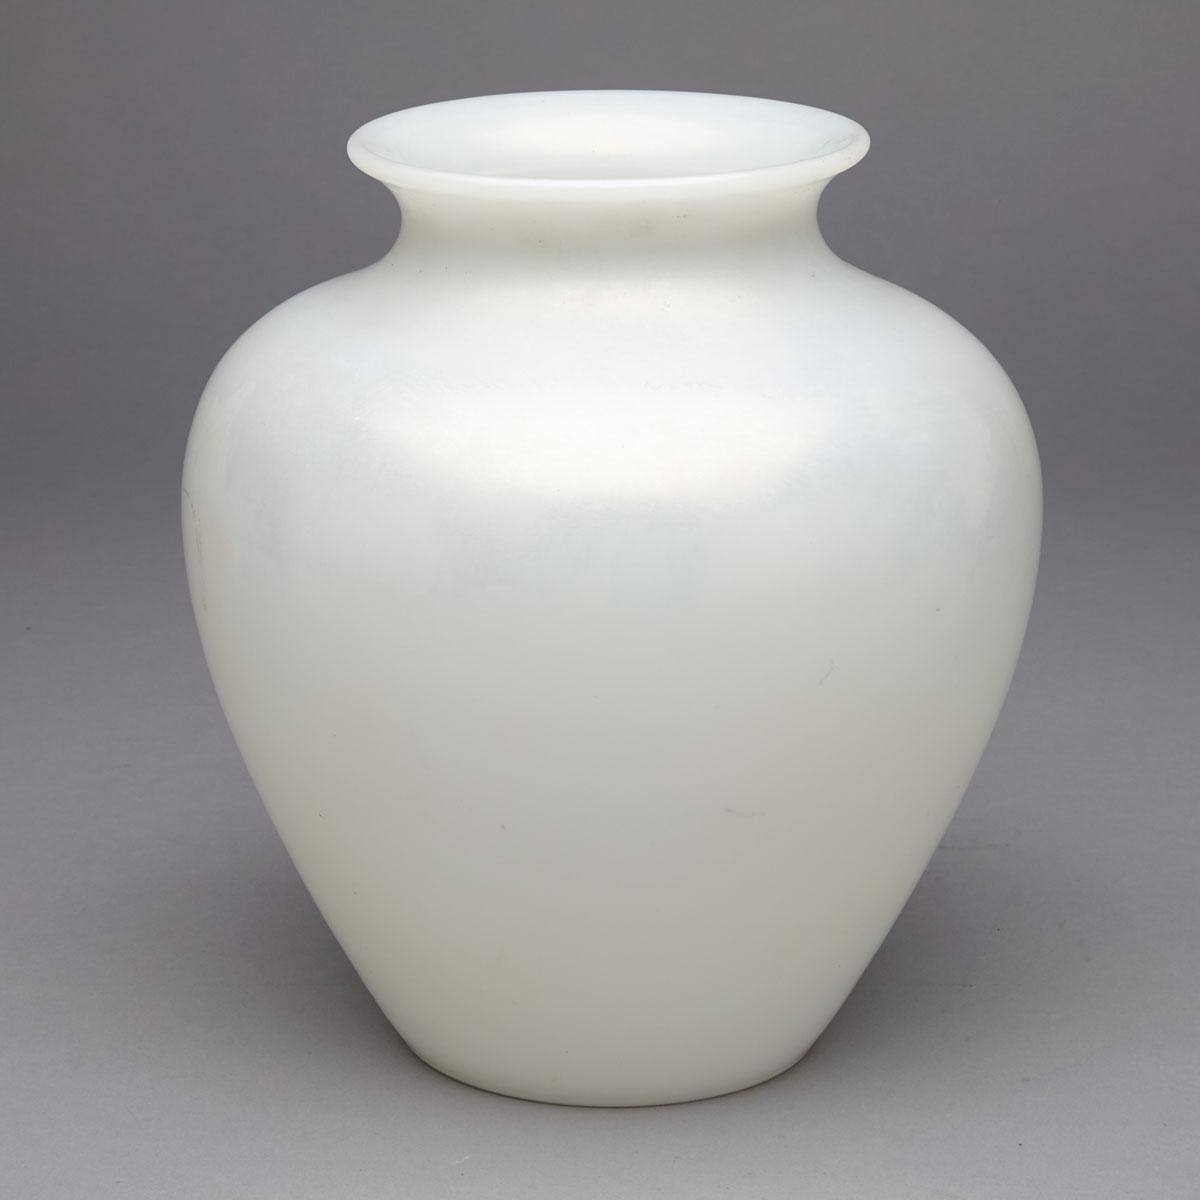 Steuben ‘Calcite’ Iridescent Opaque White Glass Vase, 1920s